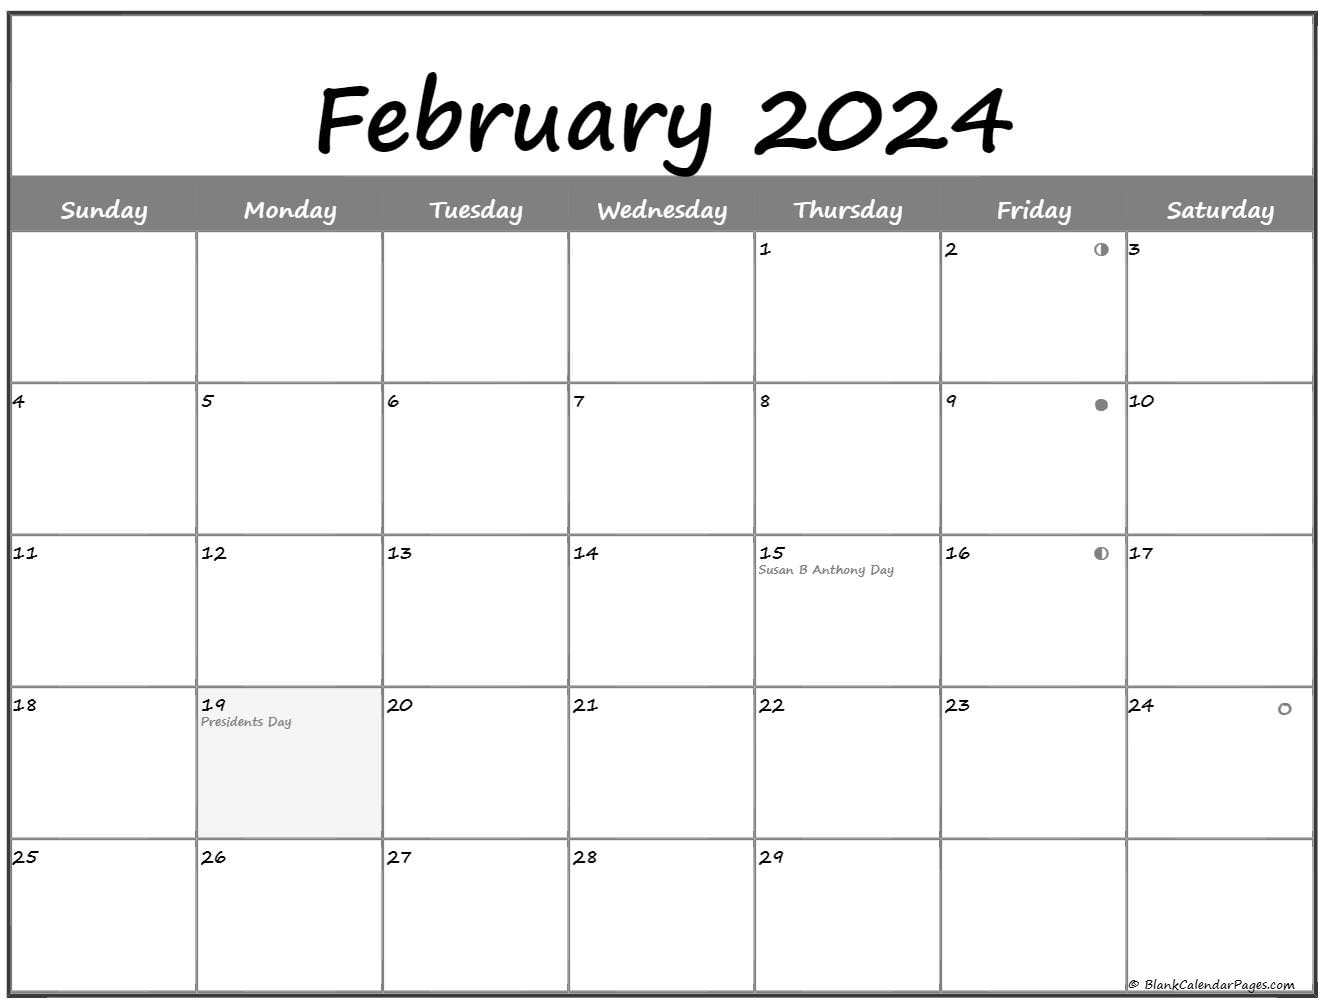 February 2021 Lunar Calendar | Moon Phase Calendar1767 x 1333